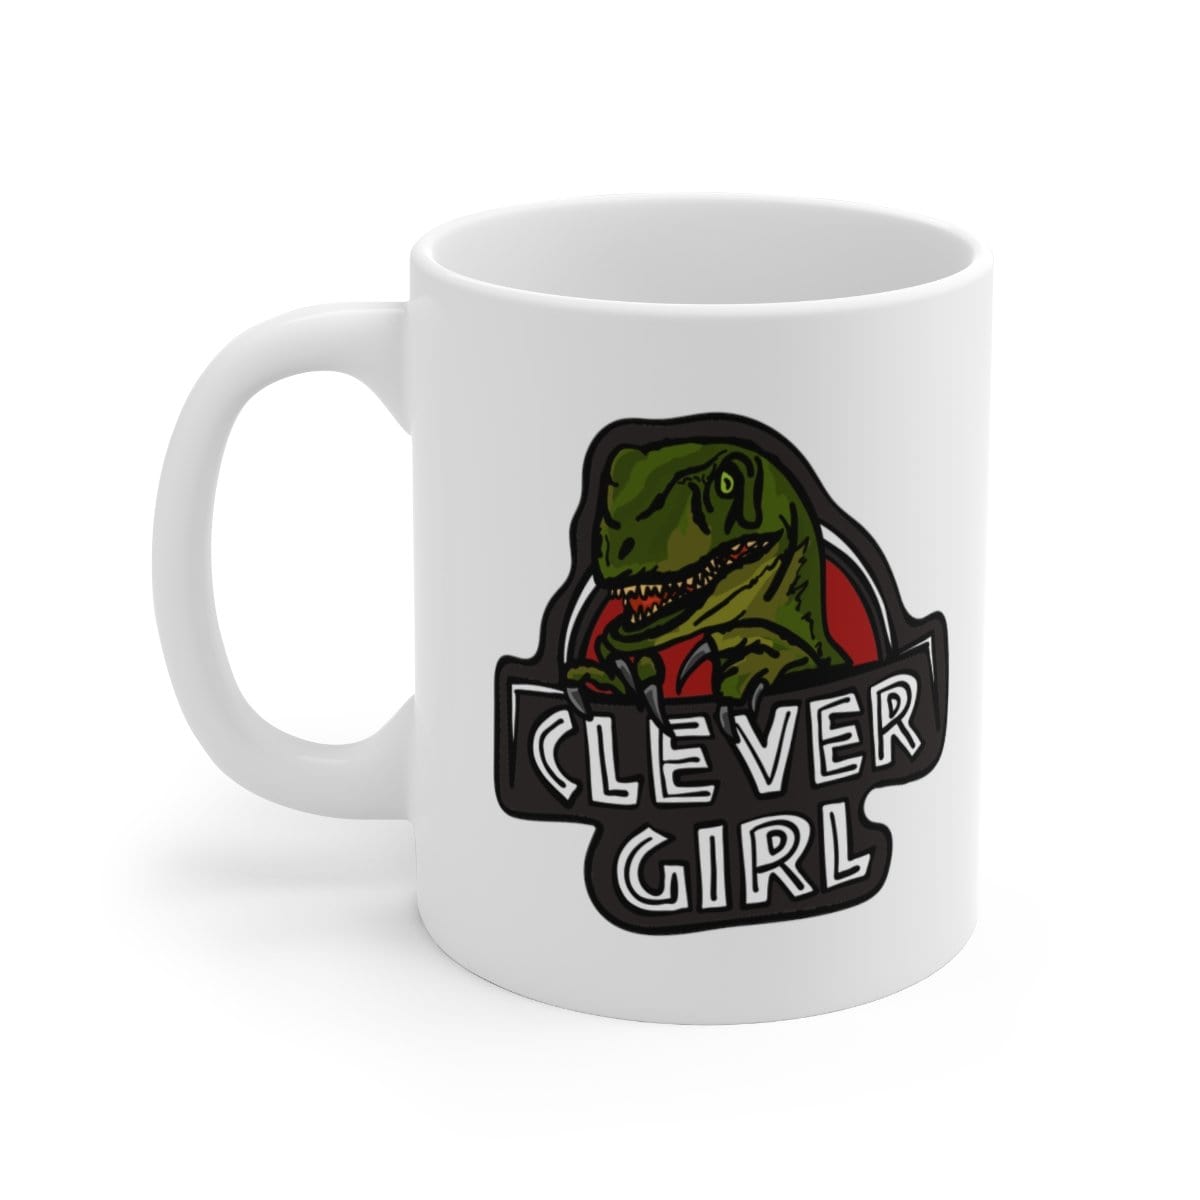 Clever Girl 🦖 - Coffee Mug